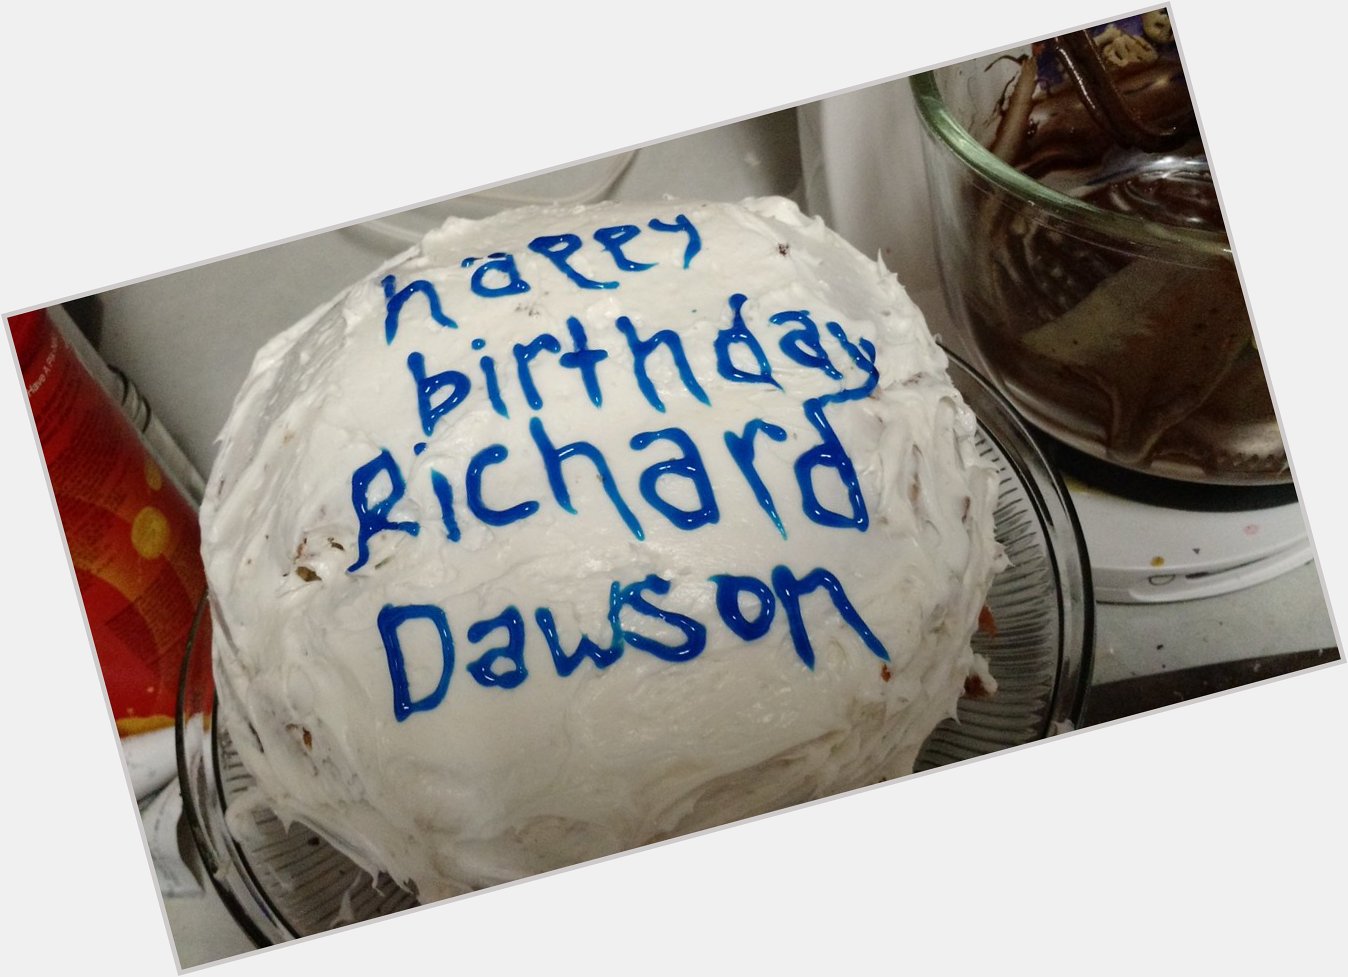  Happy Birthday, Richard Dawson! We love you! 